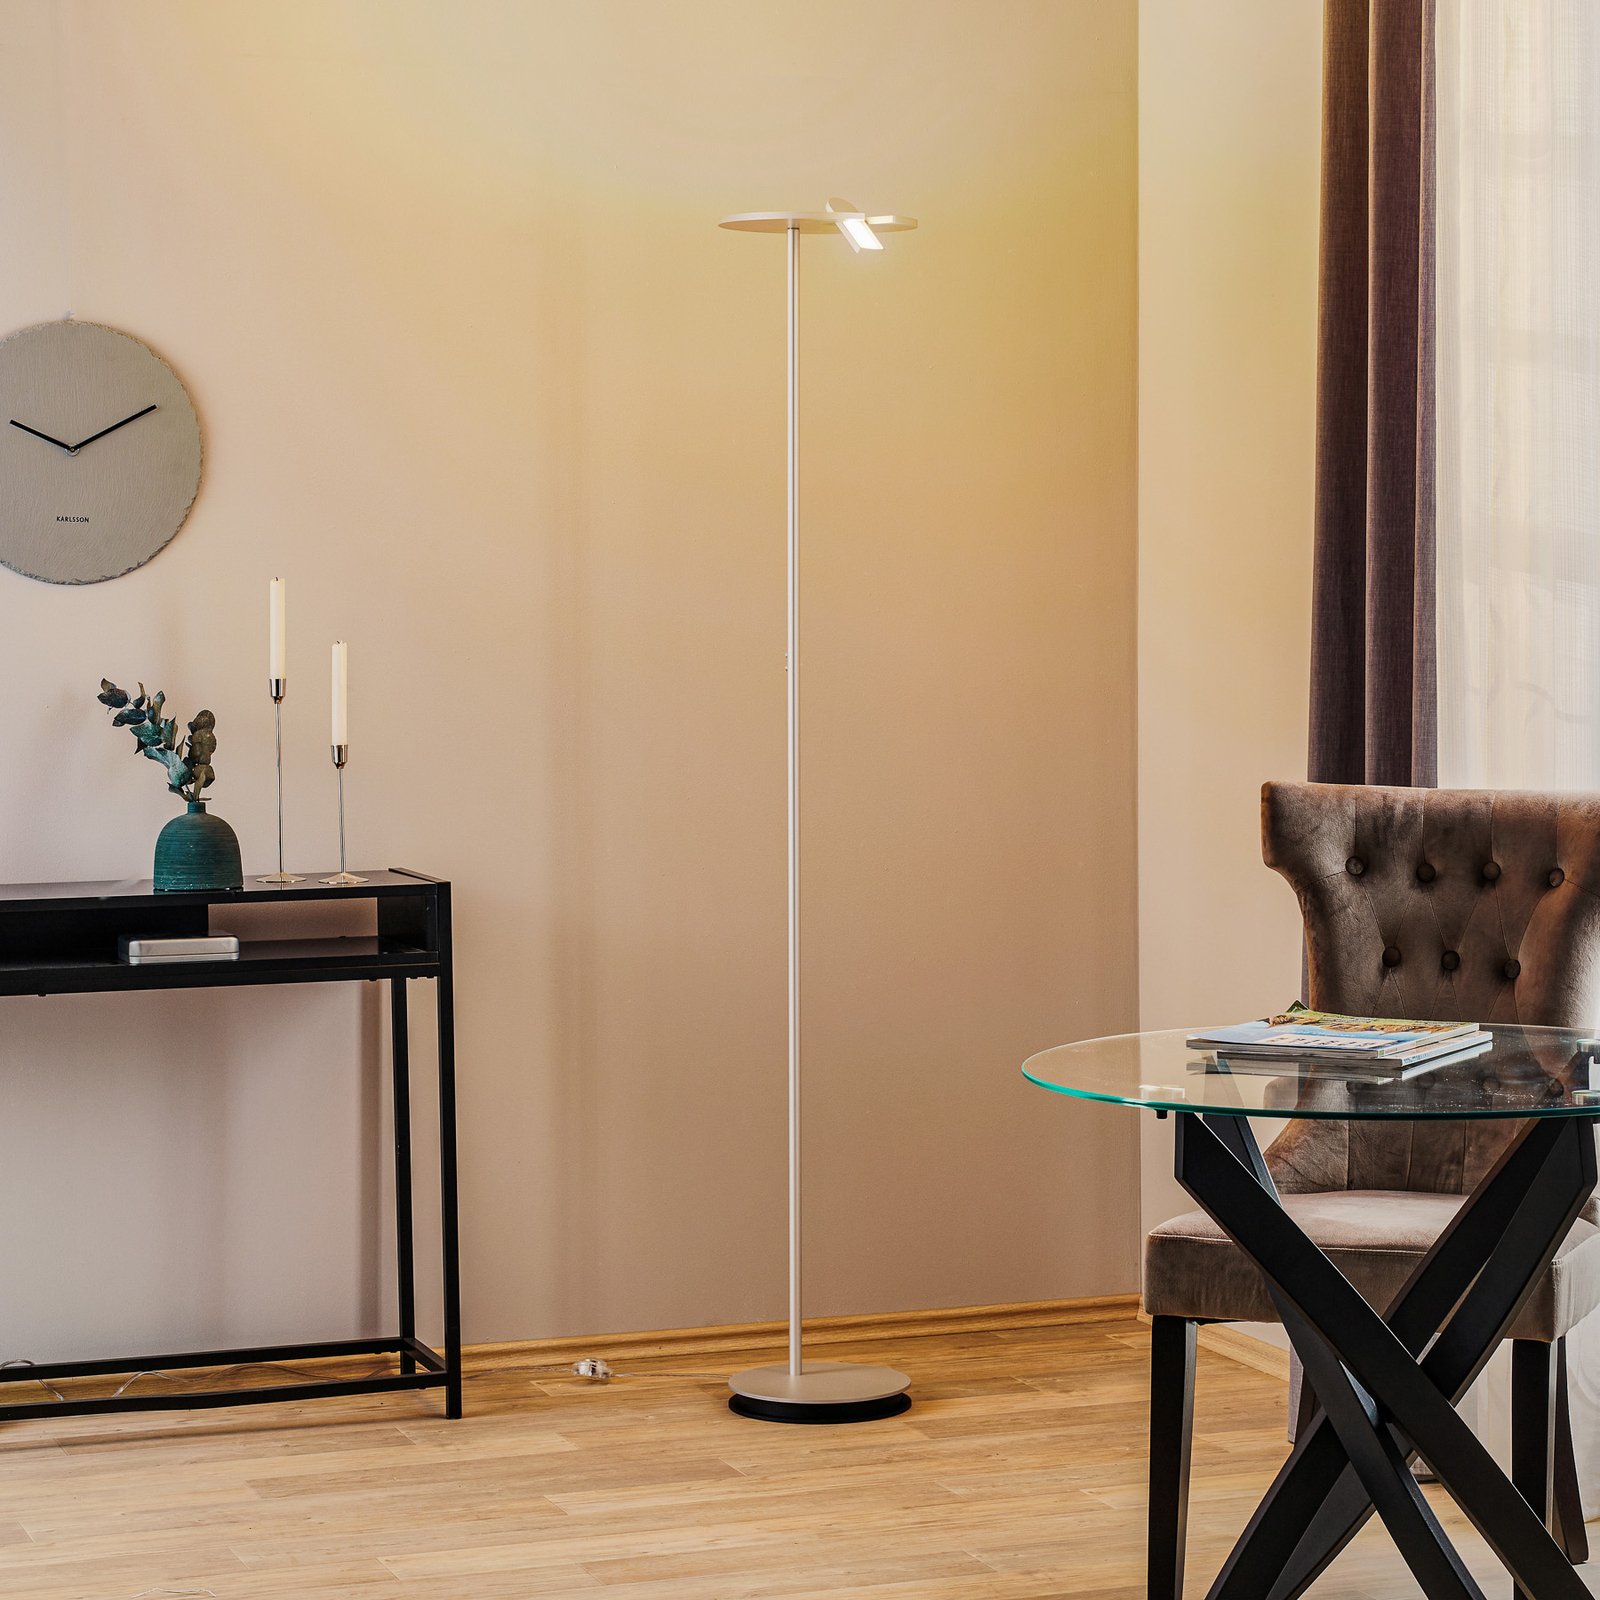 Bopp Share LED stropné svietidlo s lampou na čítanie, hliník